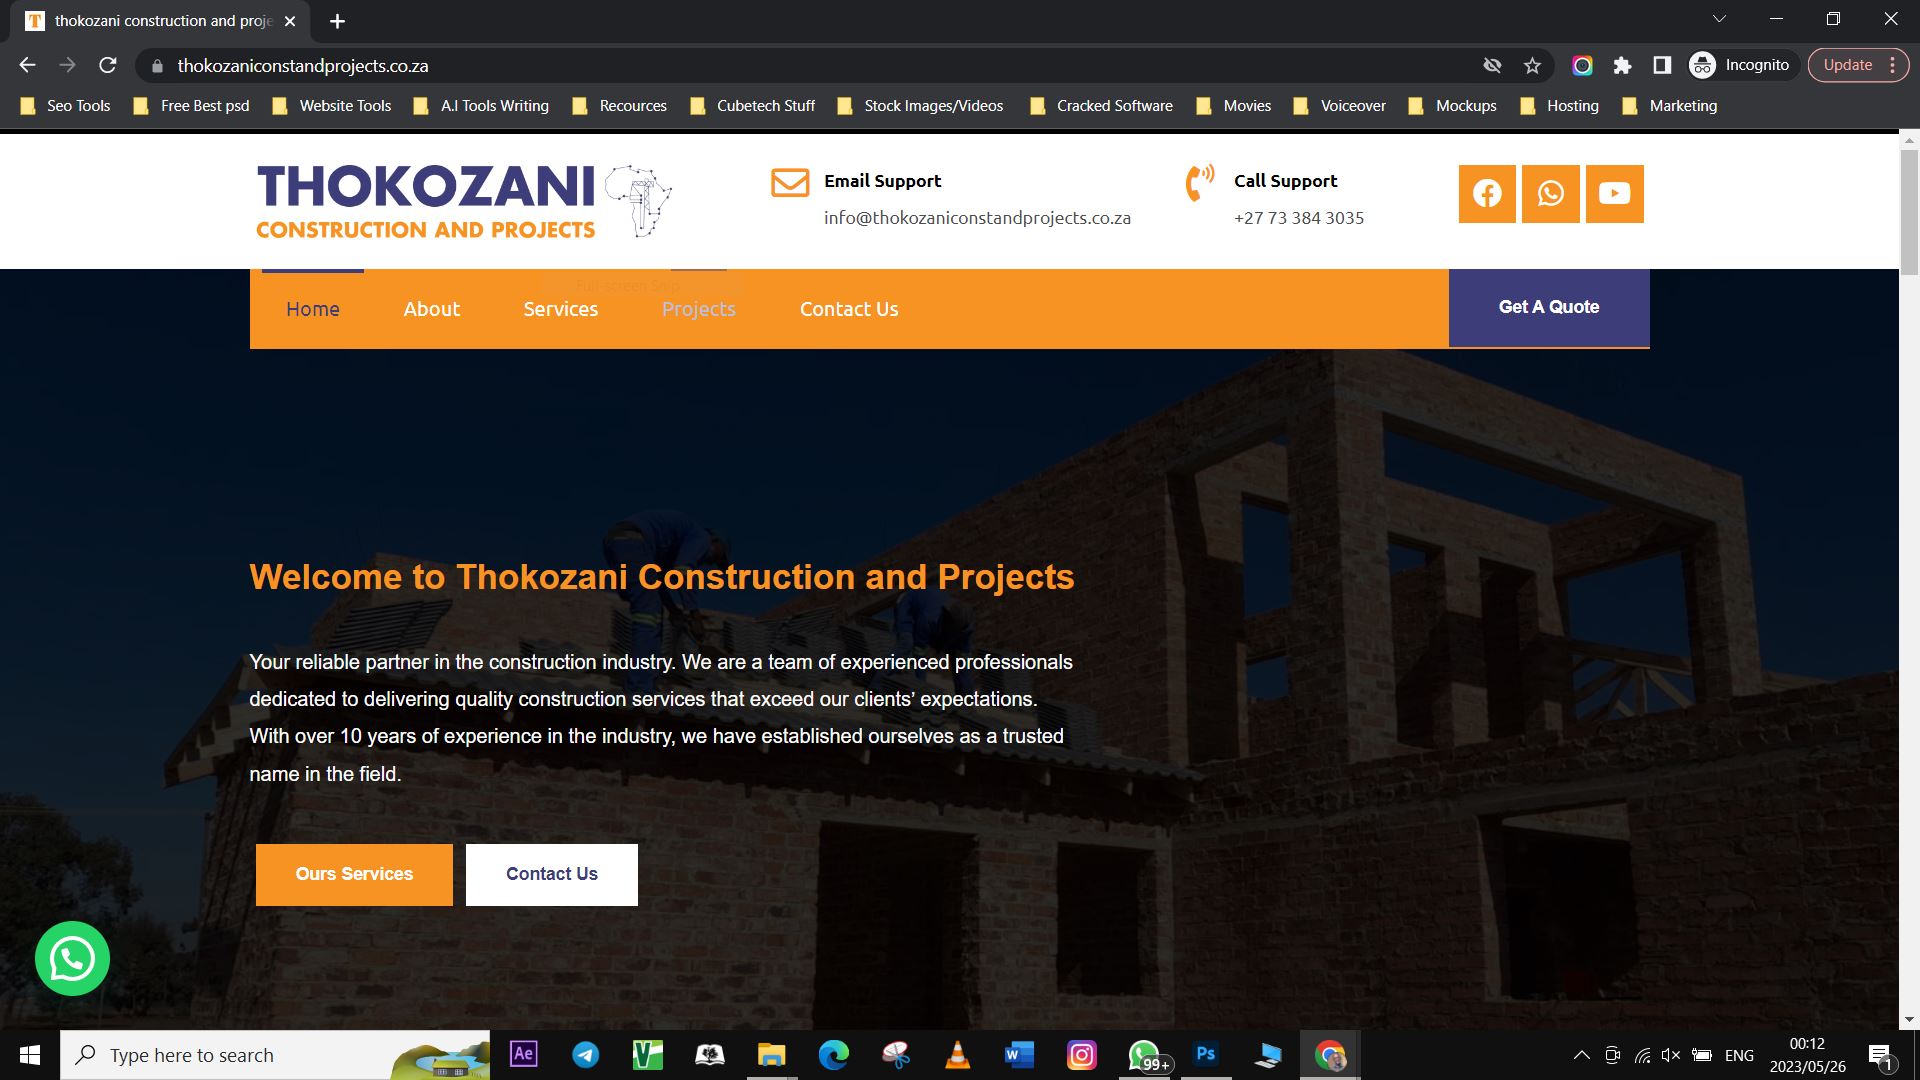 Thokozani Construction and projects - Cubetech innovations website portfolio